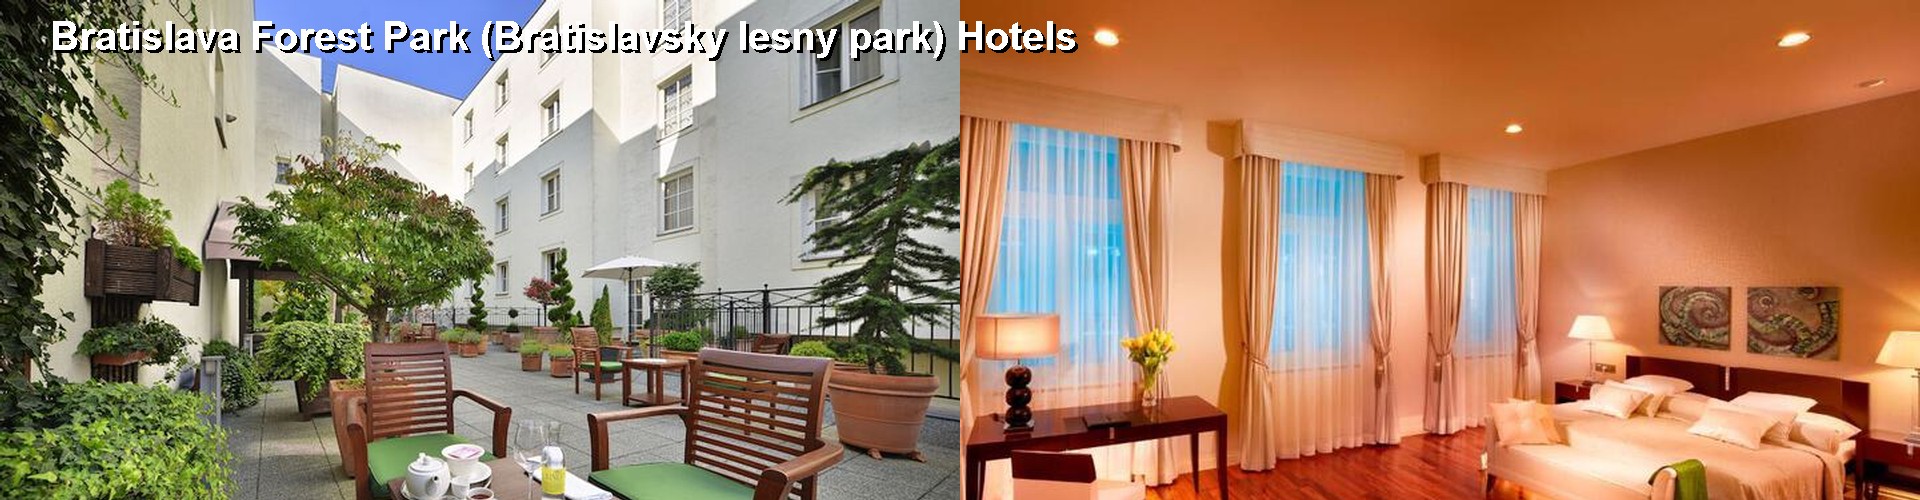 5 Best Hotels near Bratislava Forest Park (Bratislavsky lesny park)